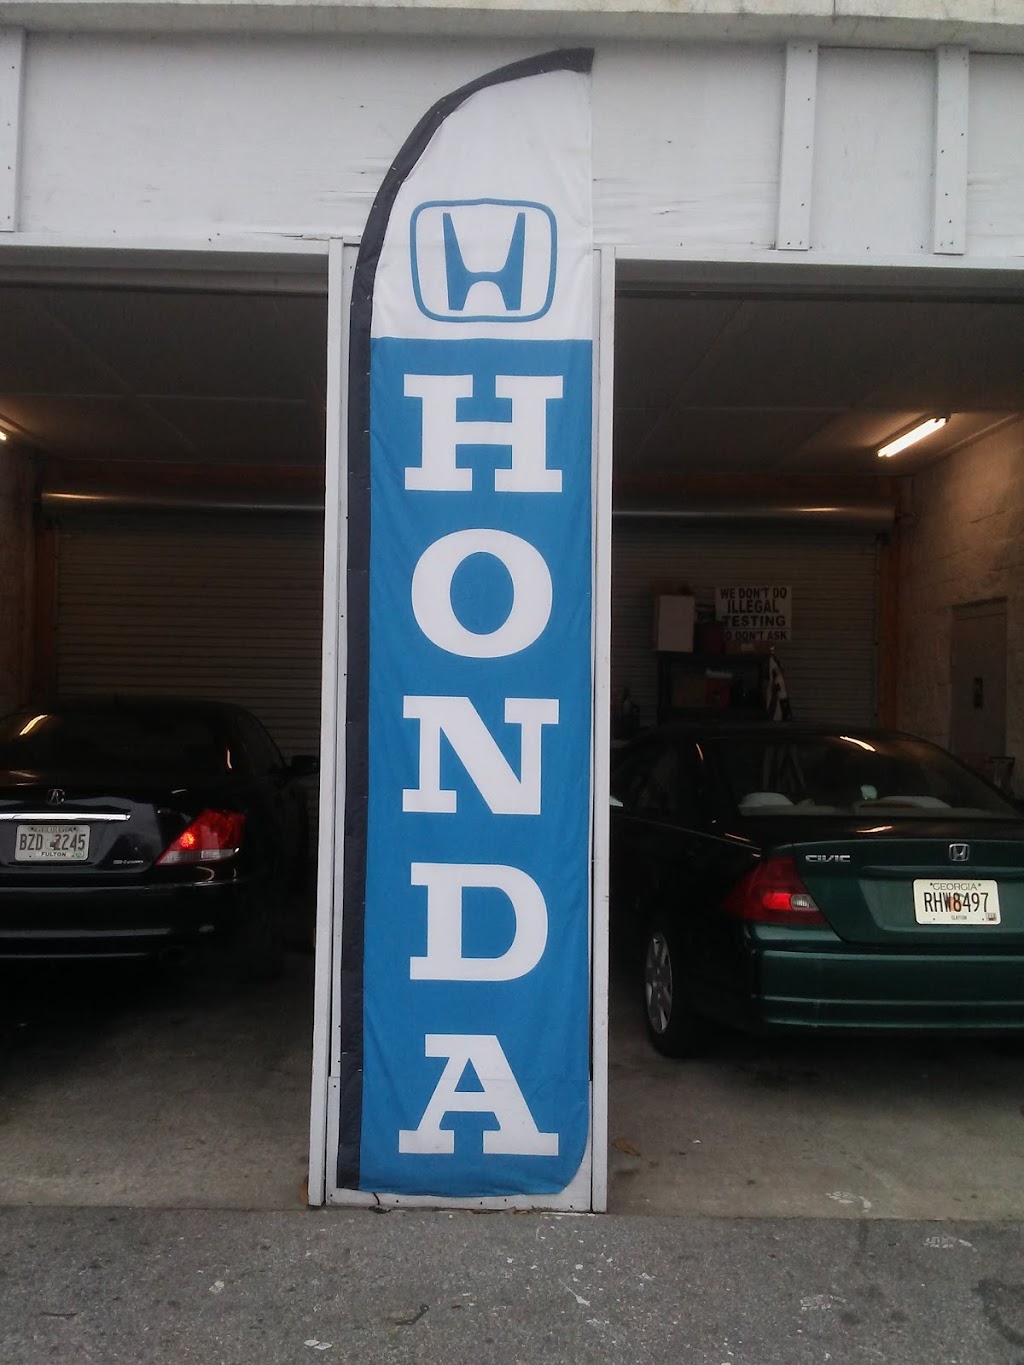 Pauls Honda and Acura Specialist | 114a Park W Dr, McDonough, GA 30253, USA | Phone: (404) 604-0600